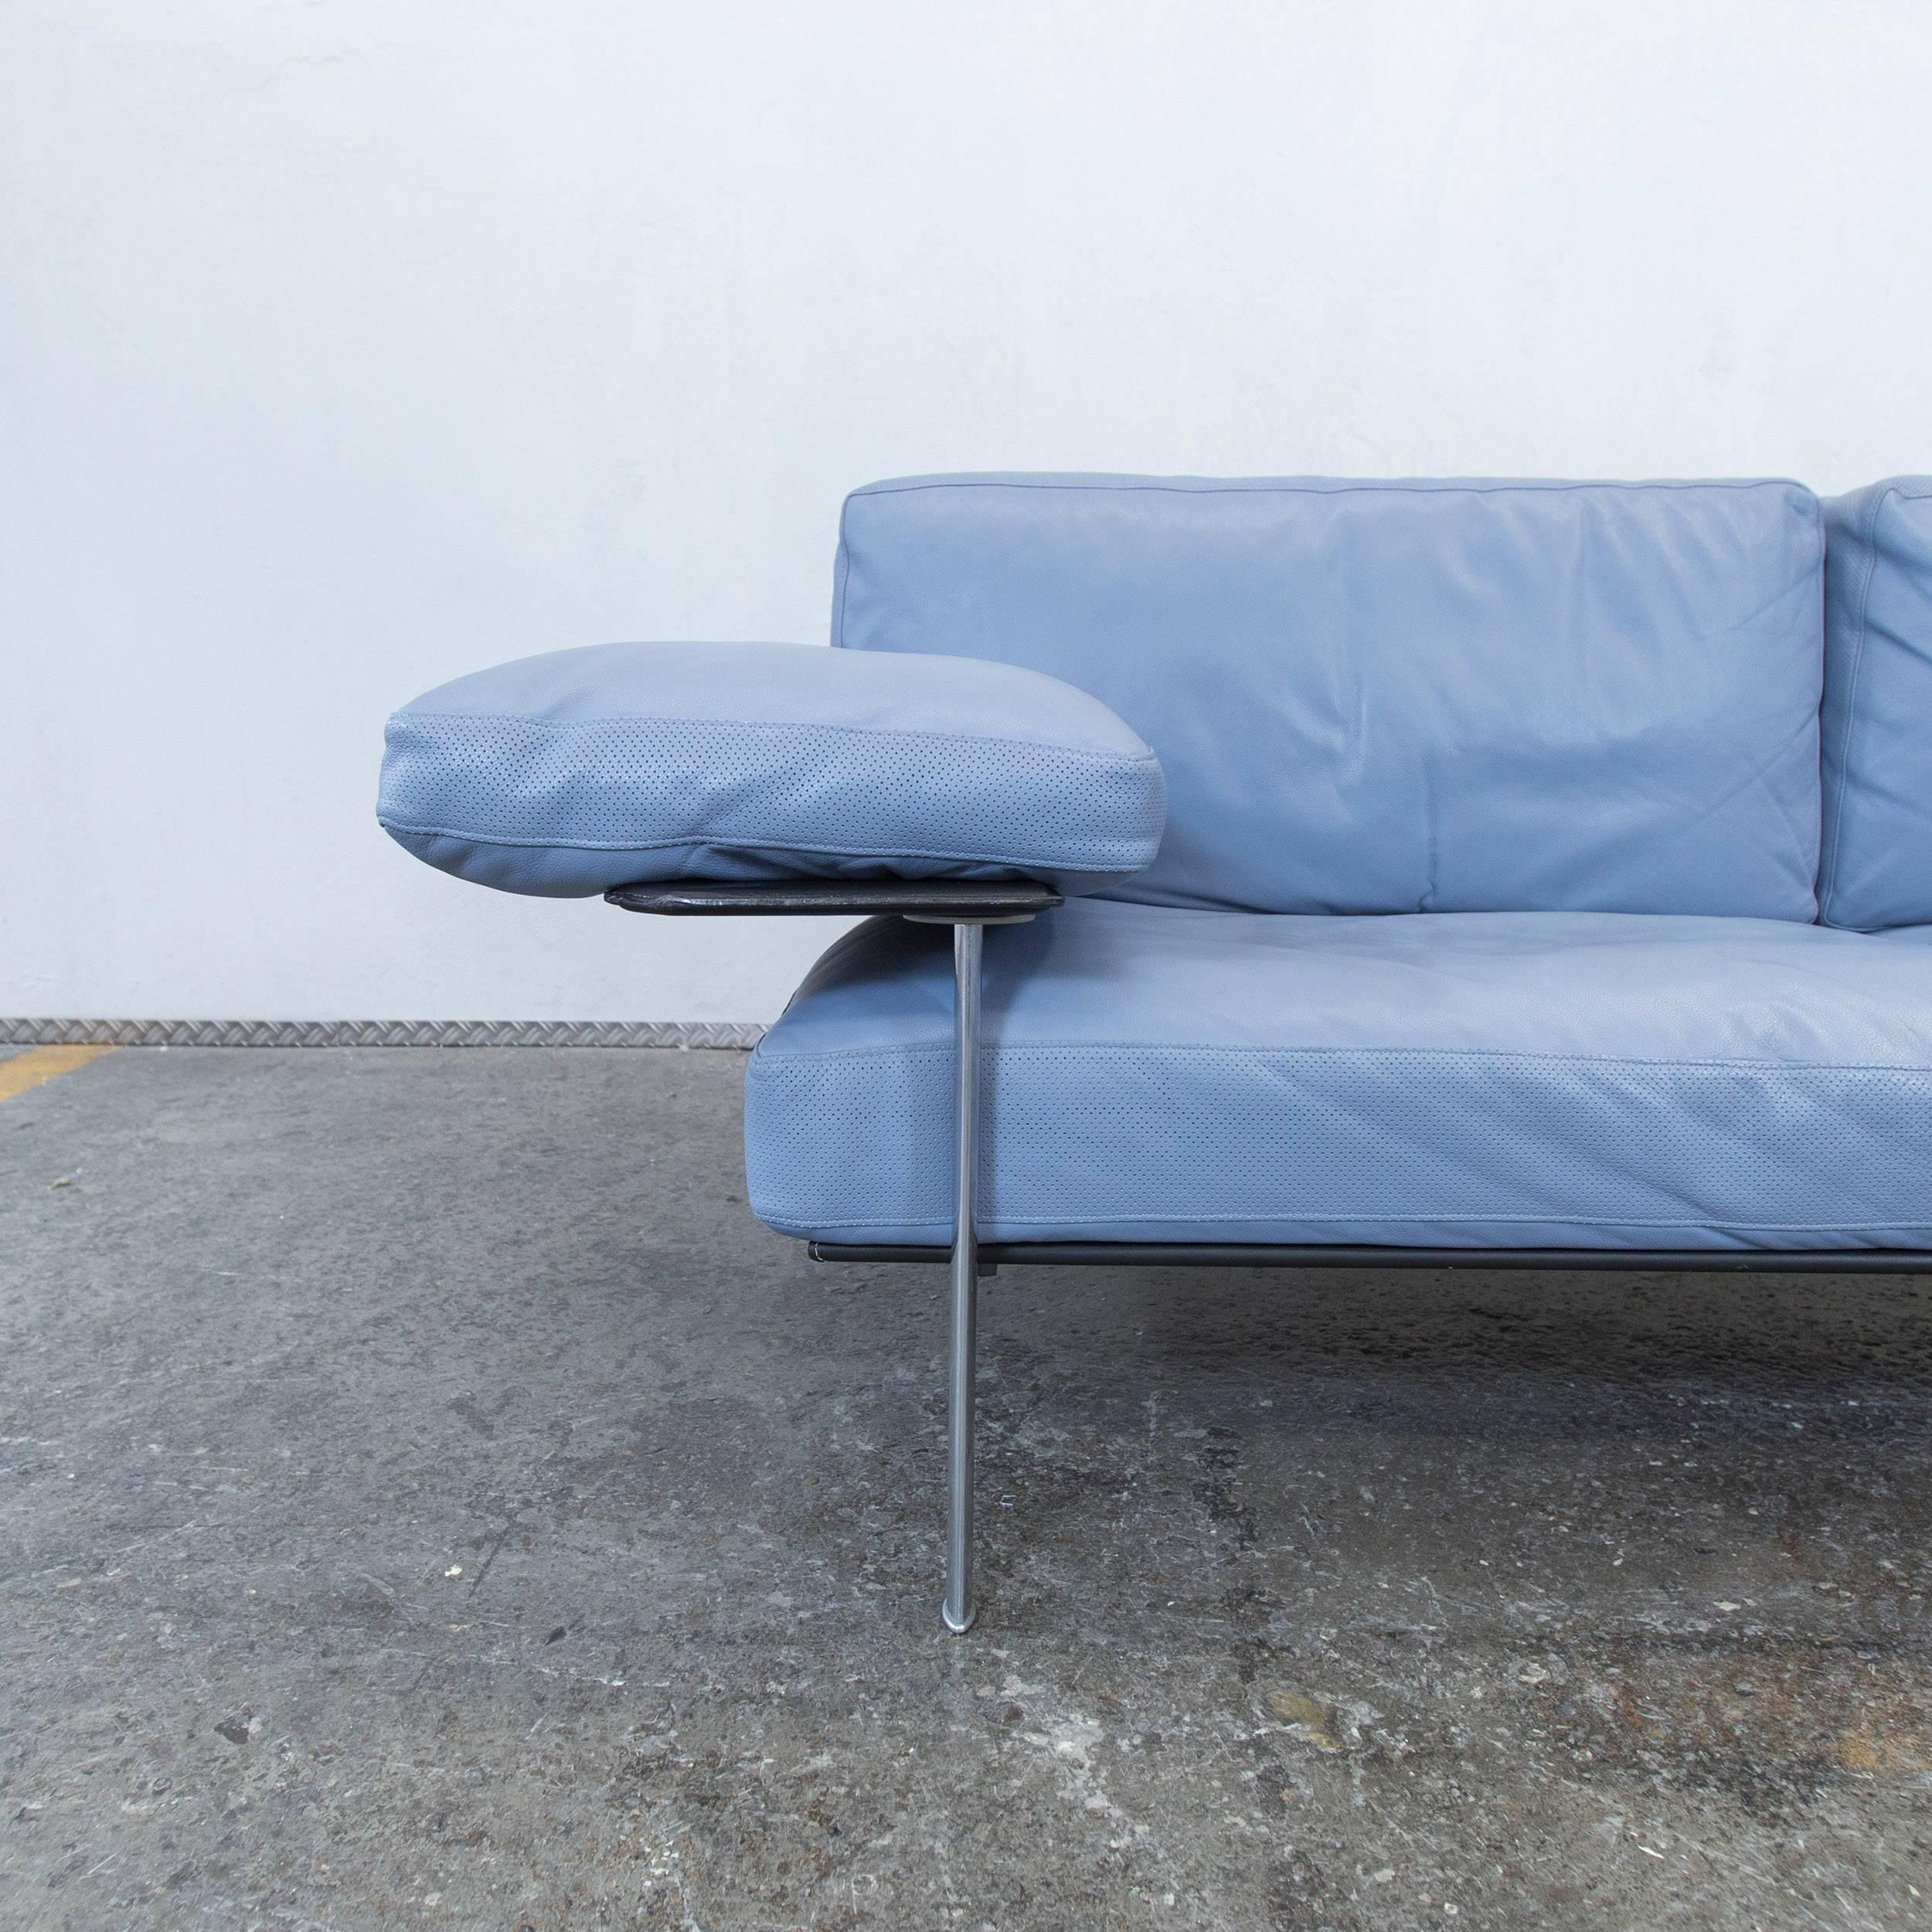 Blue colored original B&B Italia designer sofa in a minimalistic and modern design, made for pure comfort.